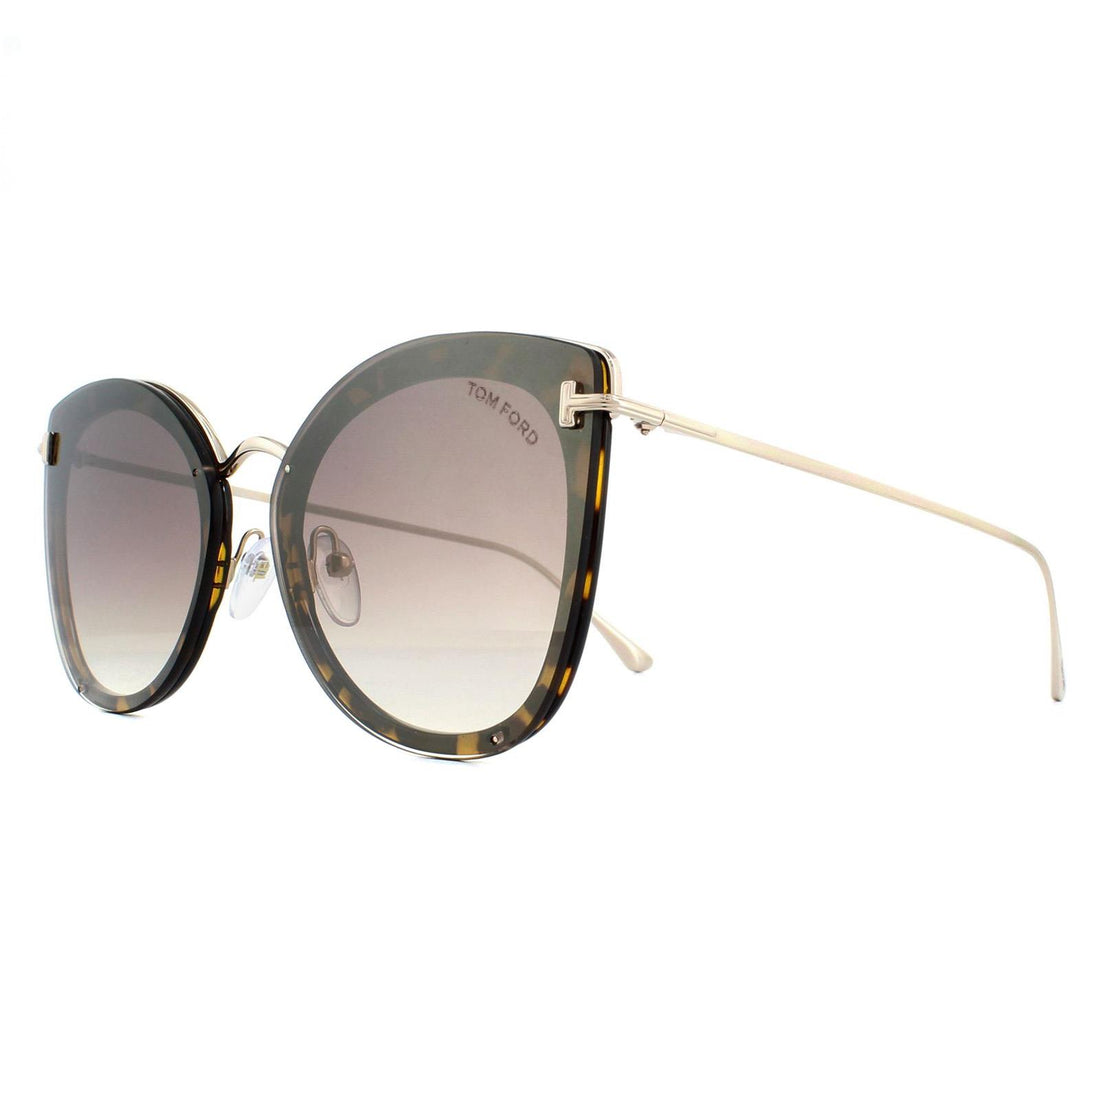 Tom Ford Sunglasses Charlotte 0657 52G Havana Gold Brown Gradient